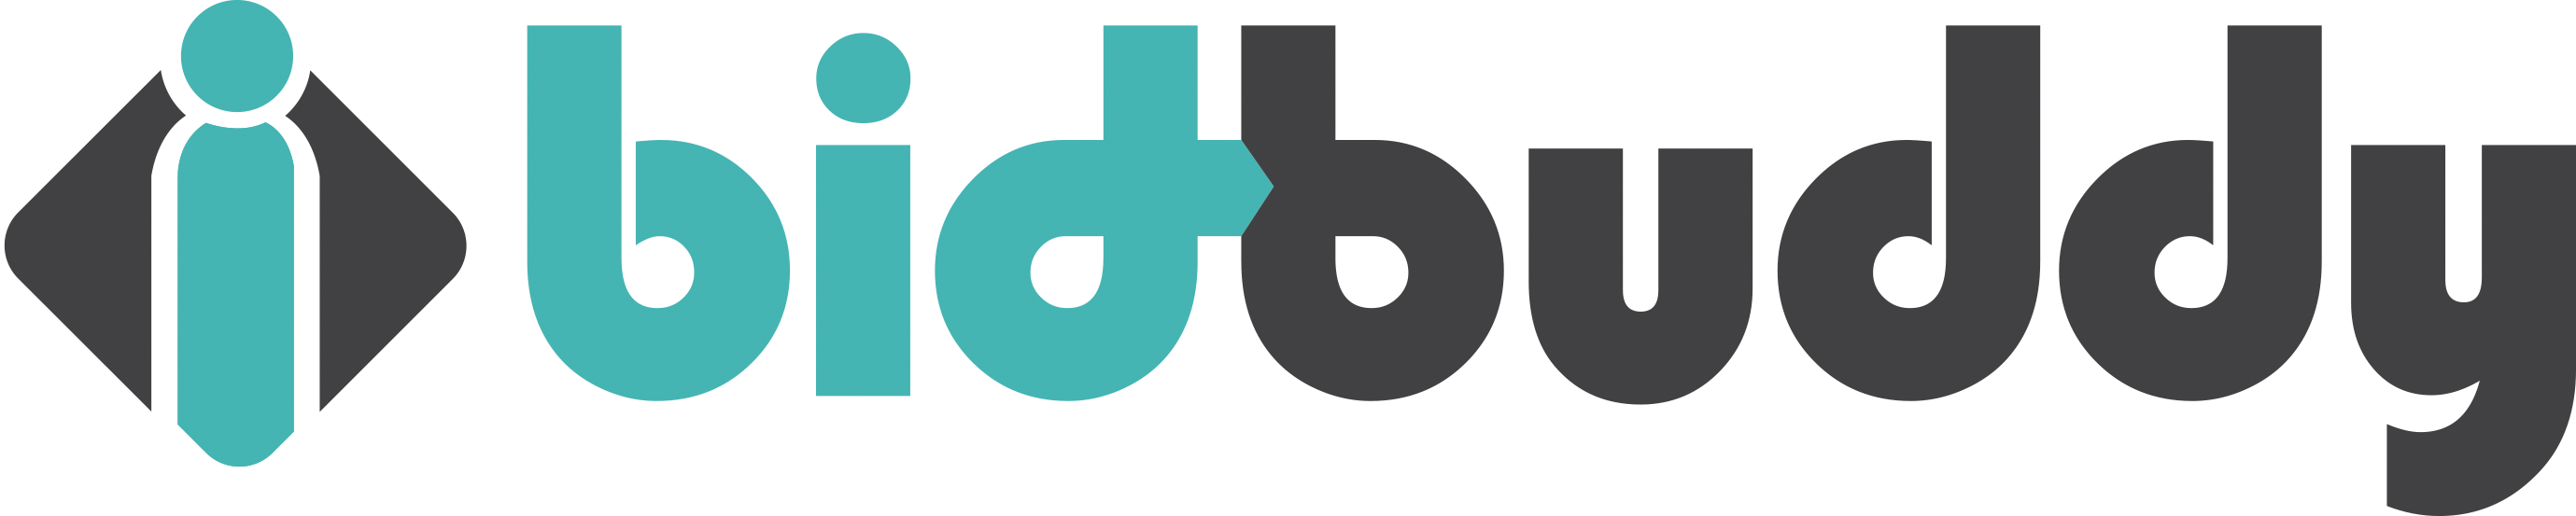 Bidbuddy logo